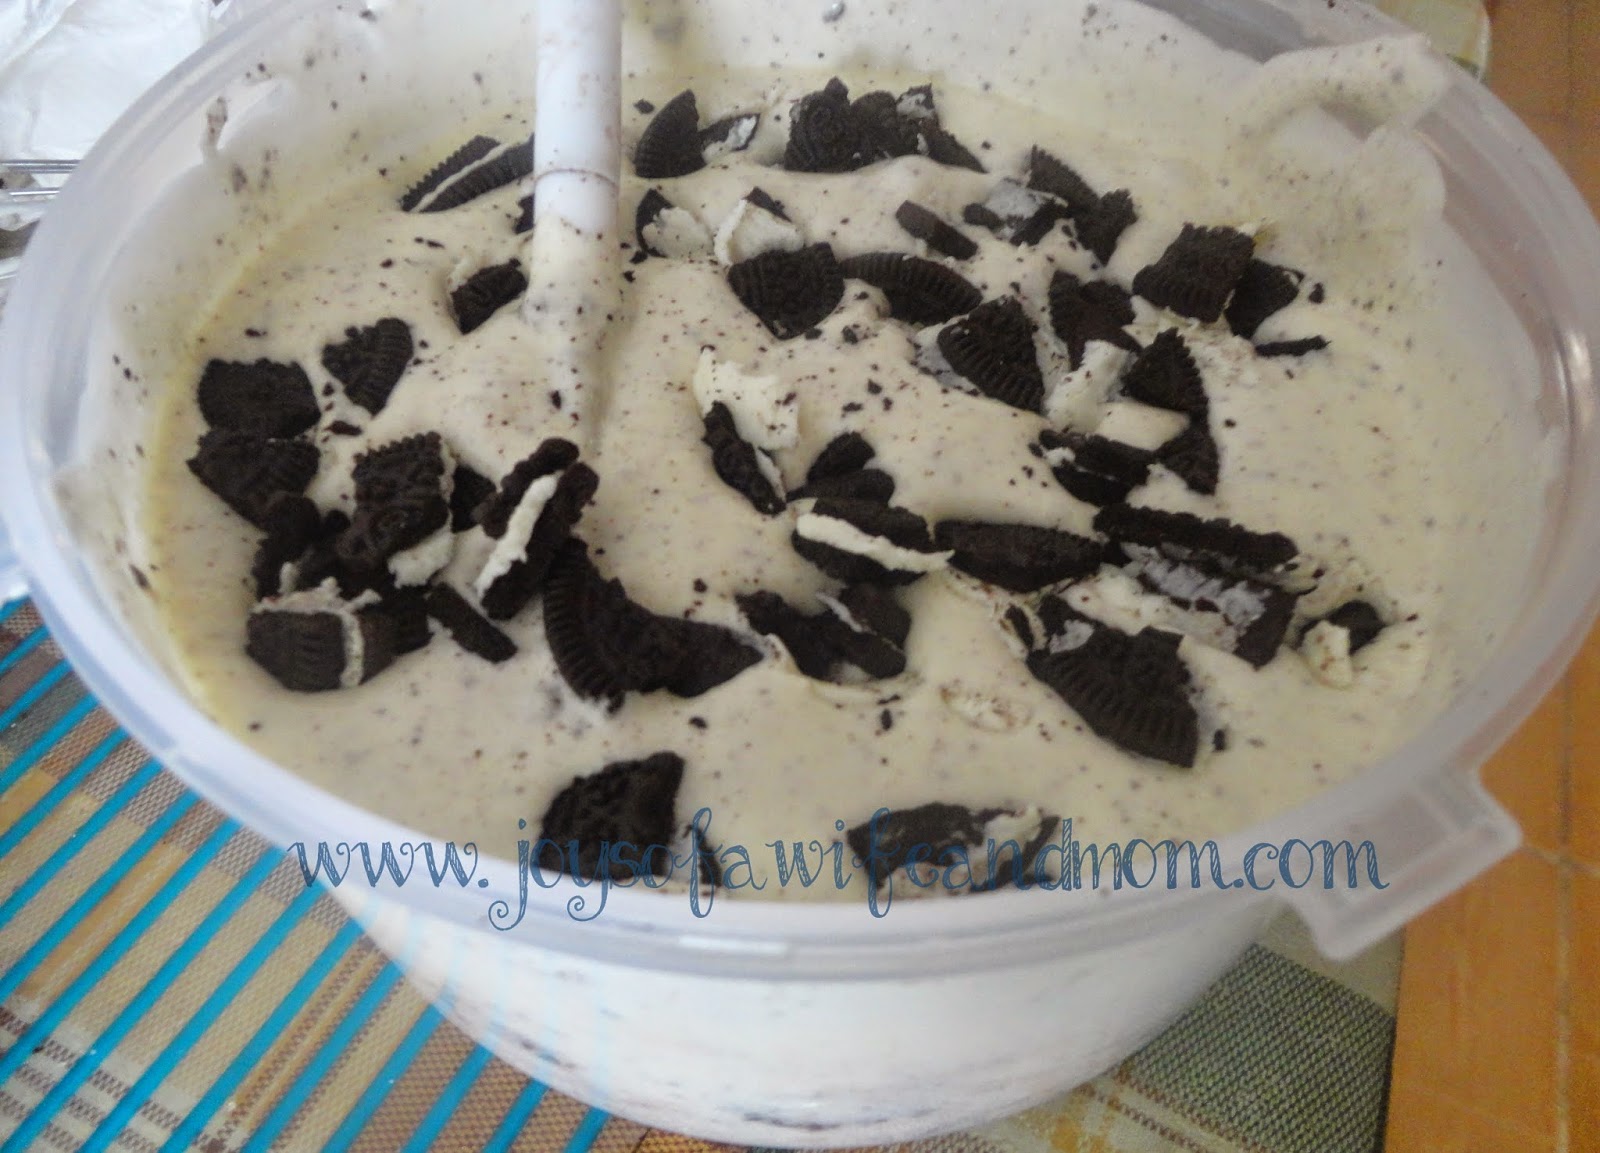 Home-made Ice Cream with Oreo Cookies